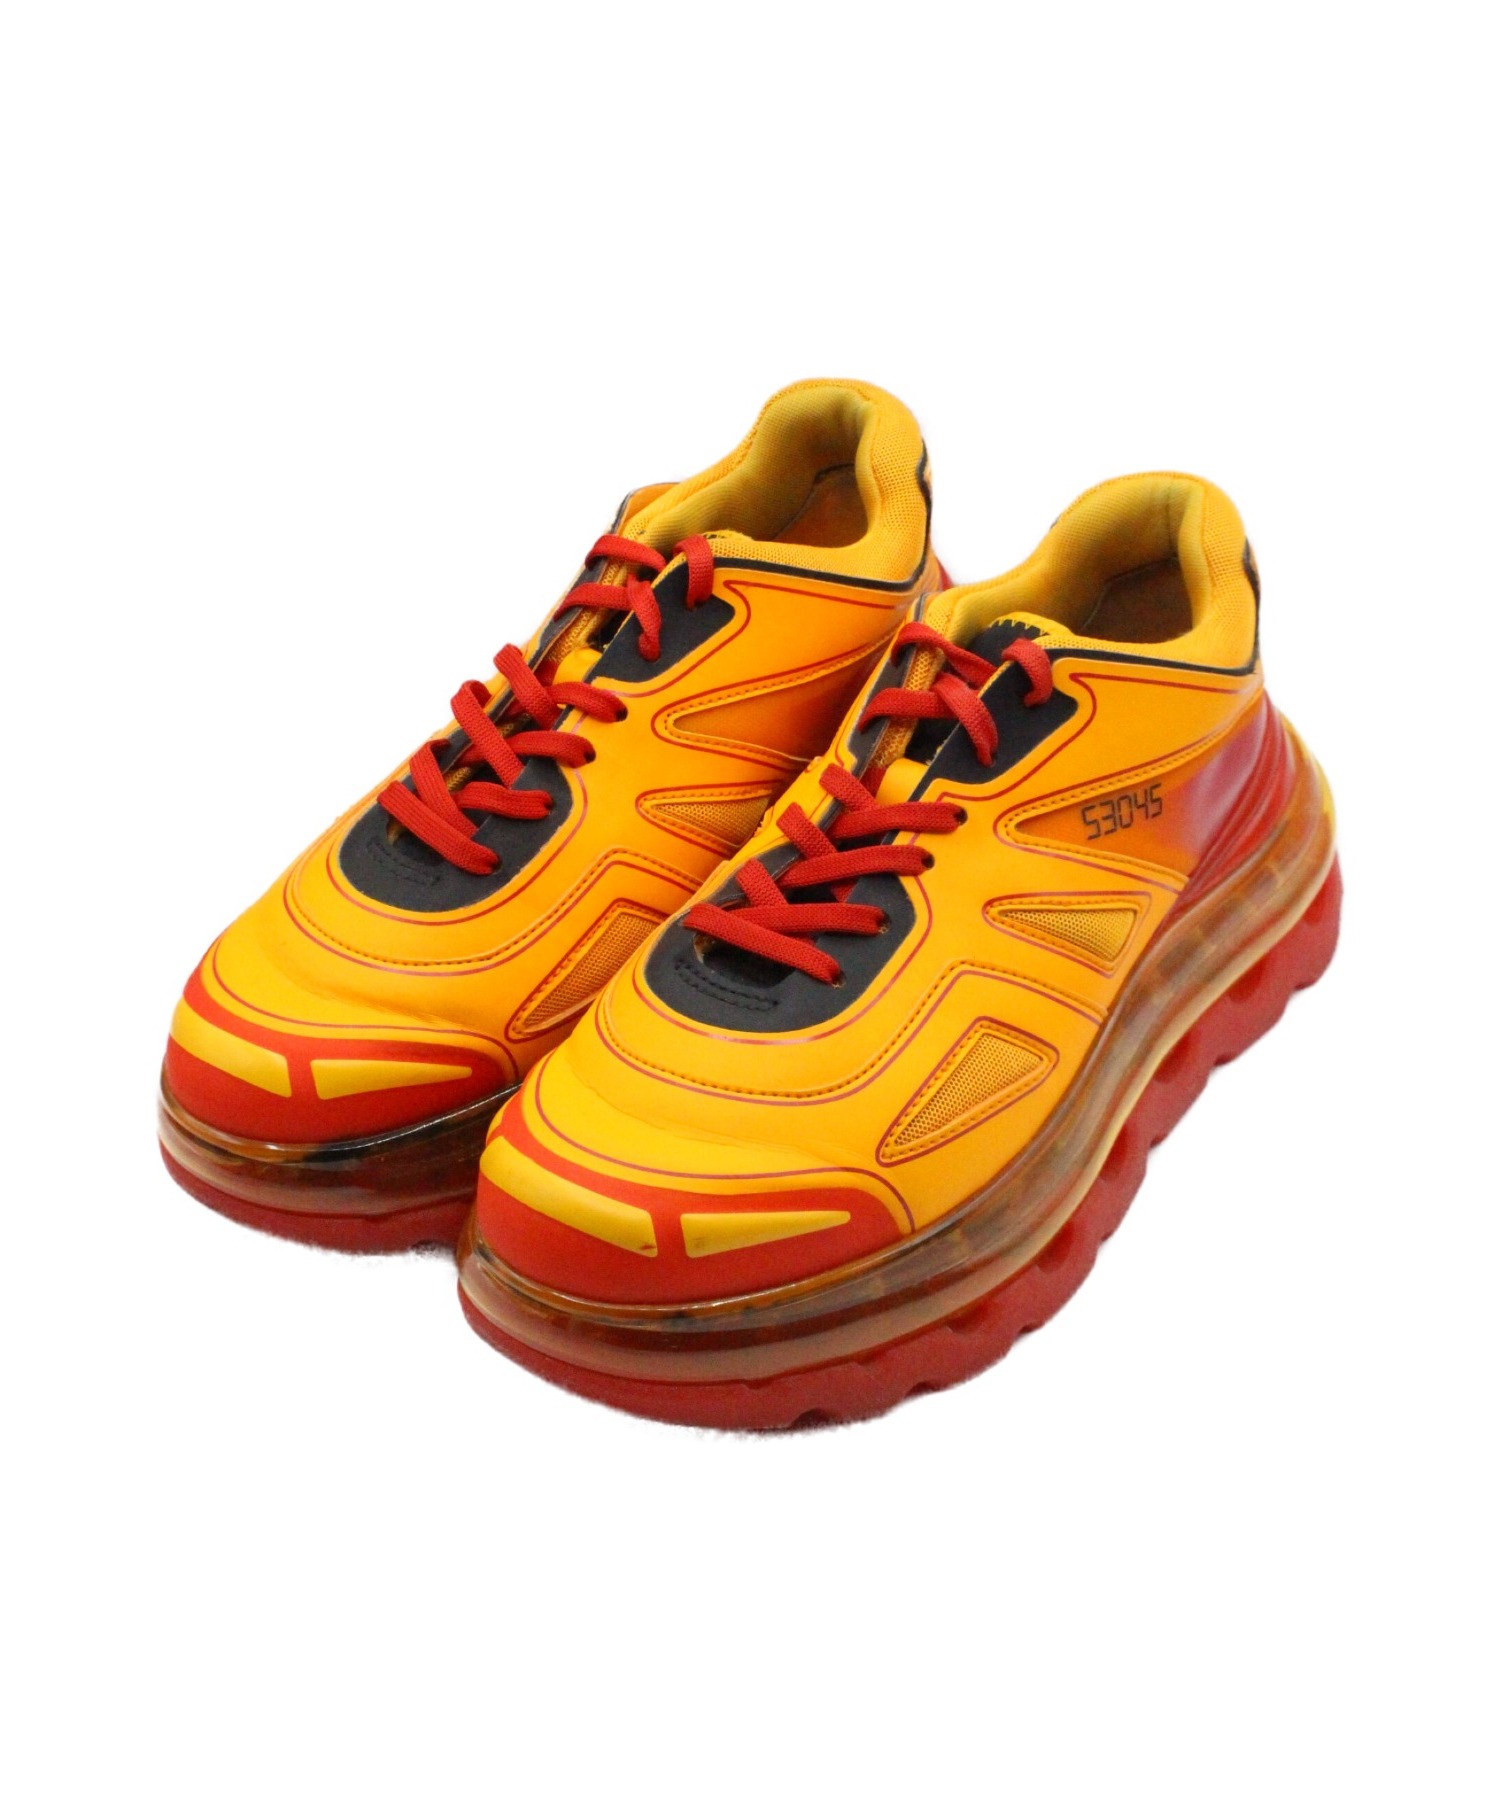 Shoes 53045 (シューズ53045) Bumpair Low-top Sneaker オレンジ サイズ:42